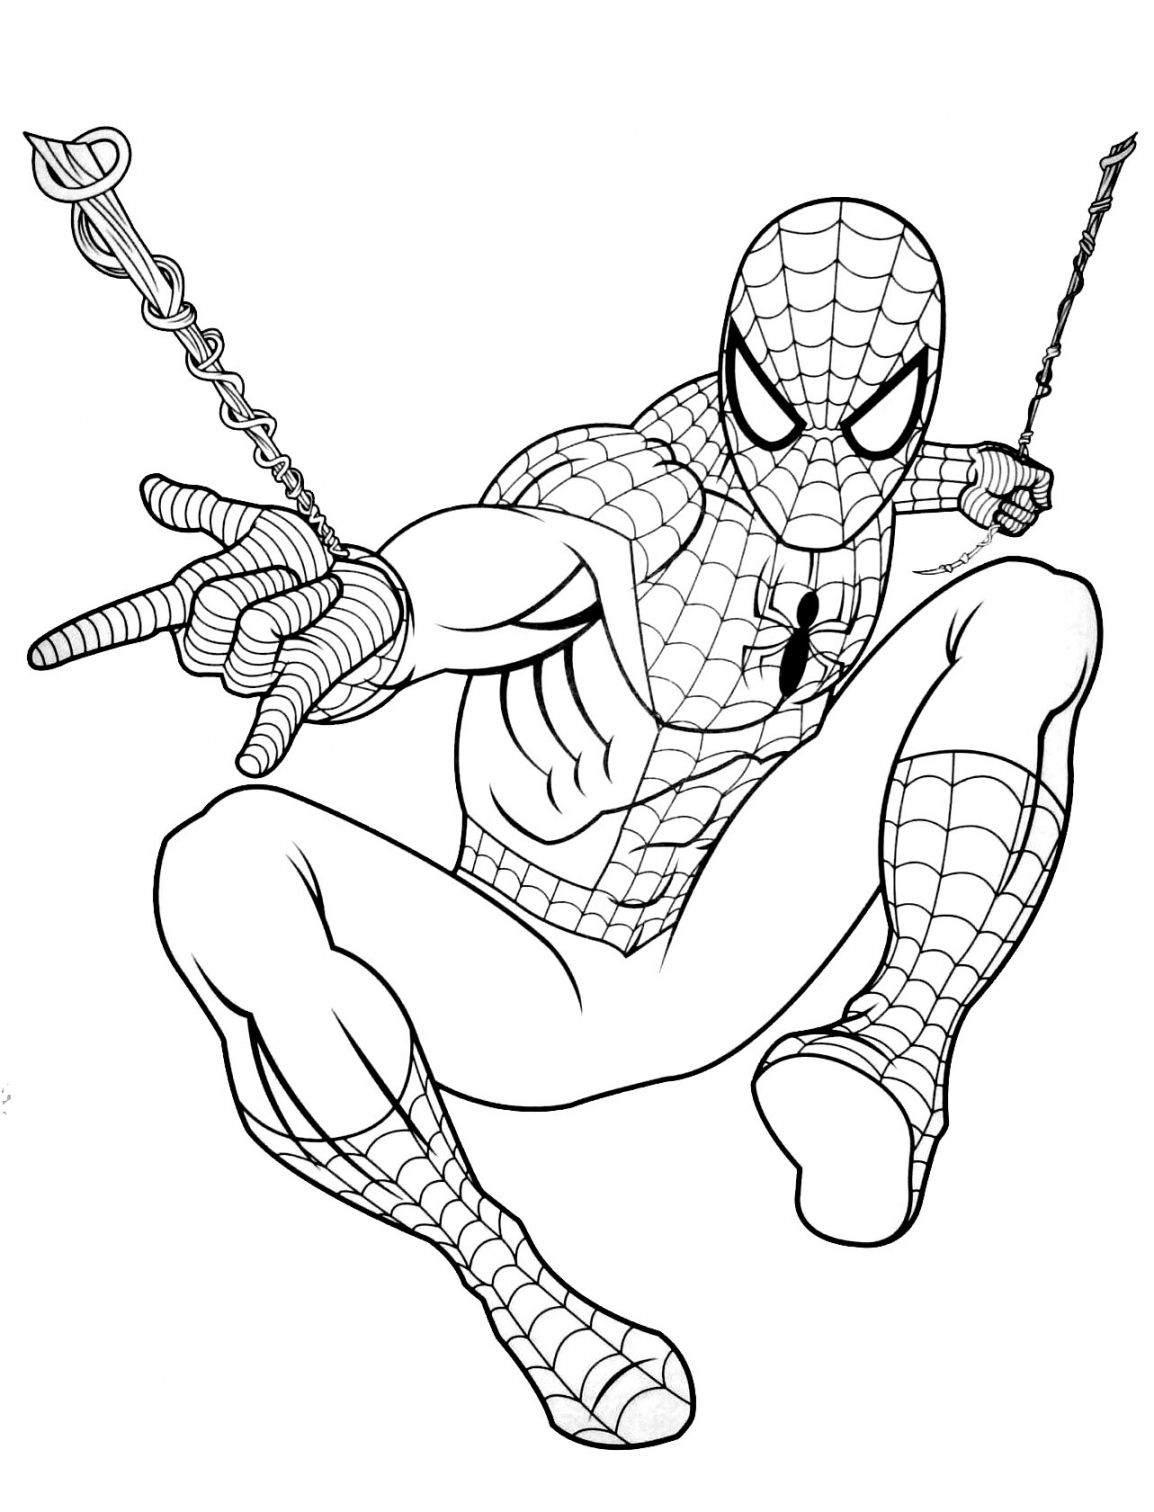 Spiderman Coloring Pages Free Printable - Printable - Free Spiderman drawing to print and color - Spiderman Kids